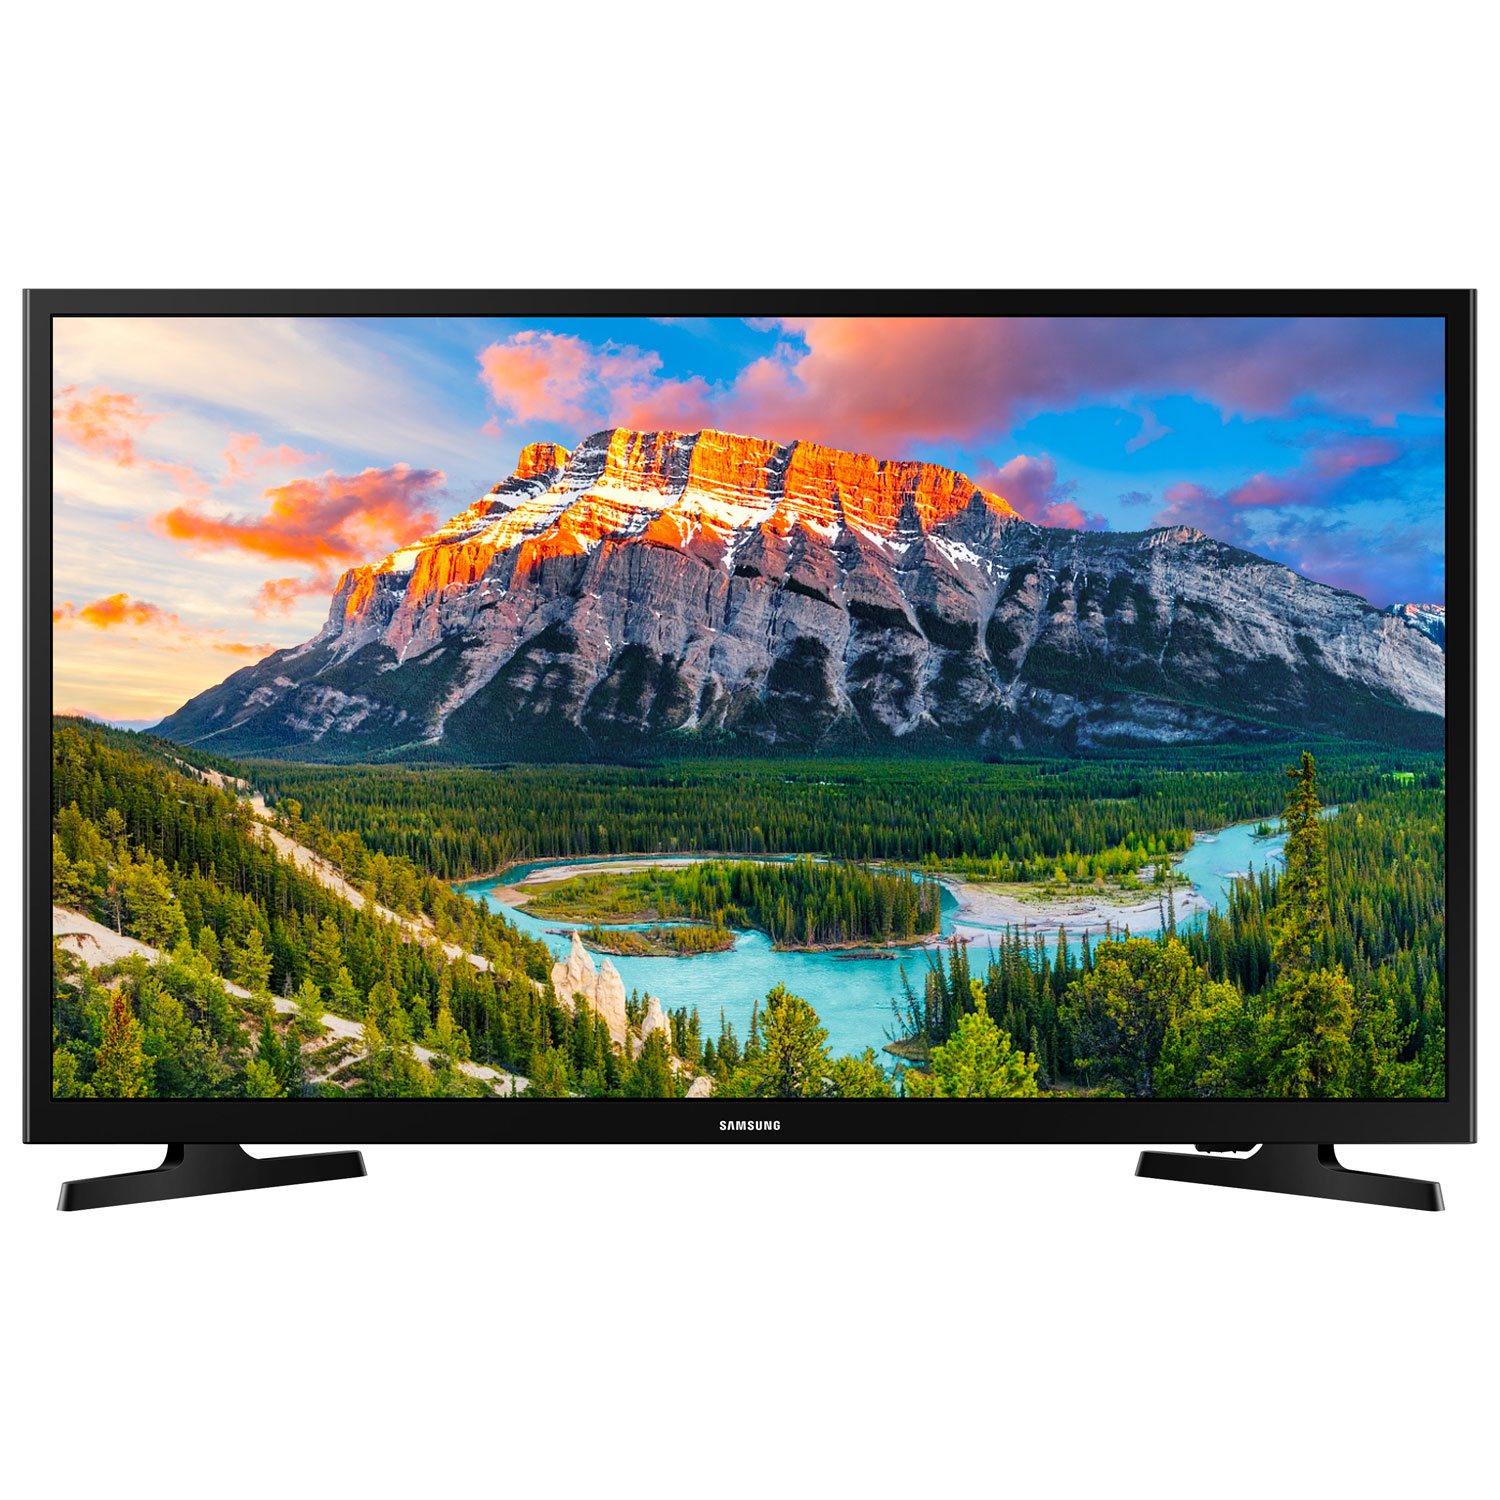 Samsung 32" 1080p HD LED Tizen Smart TV (UN32N5300AFXZC) - Glossy Black